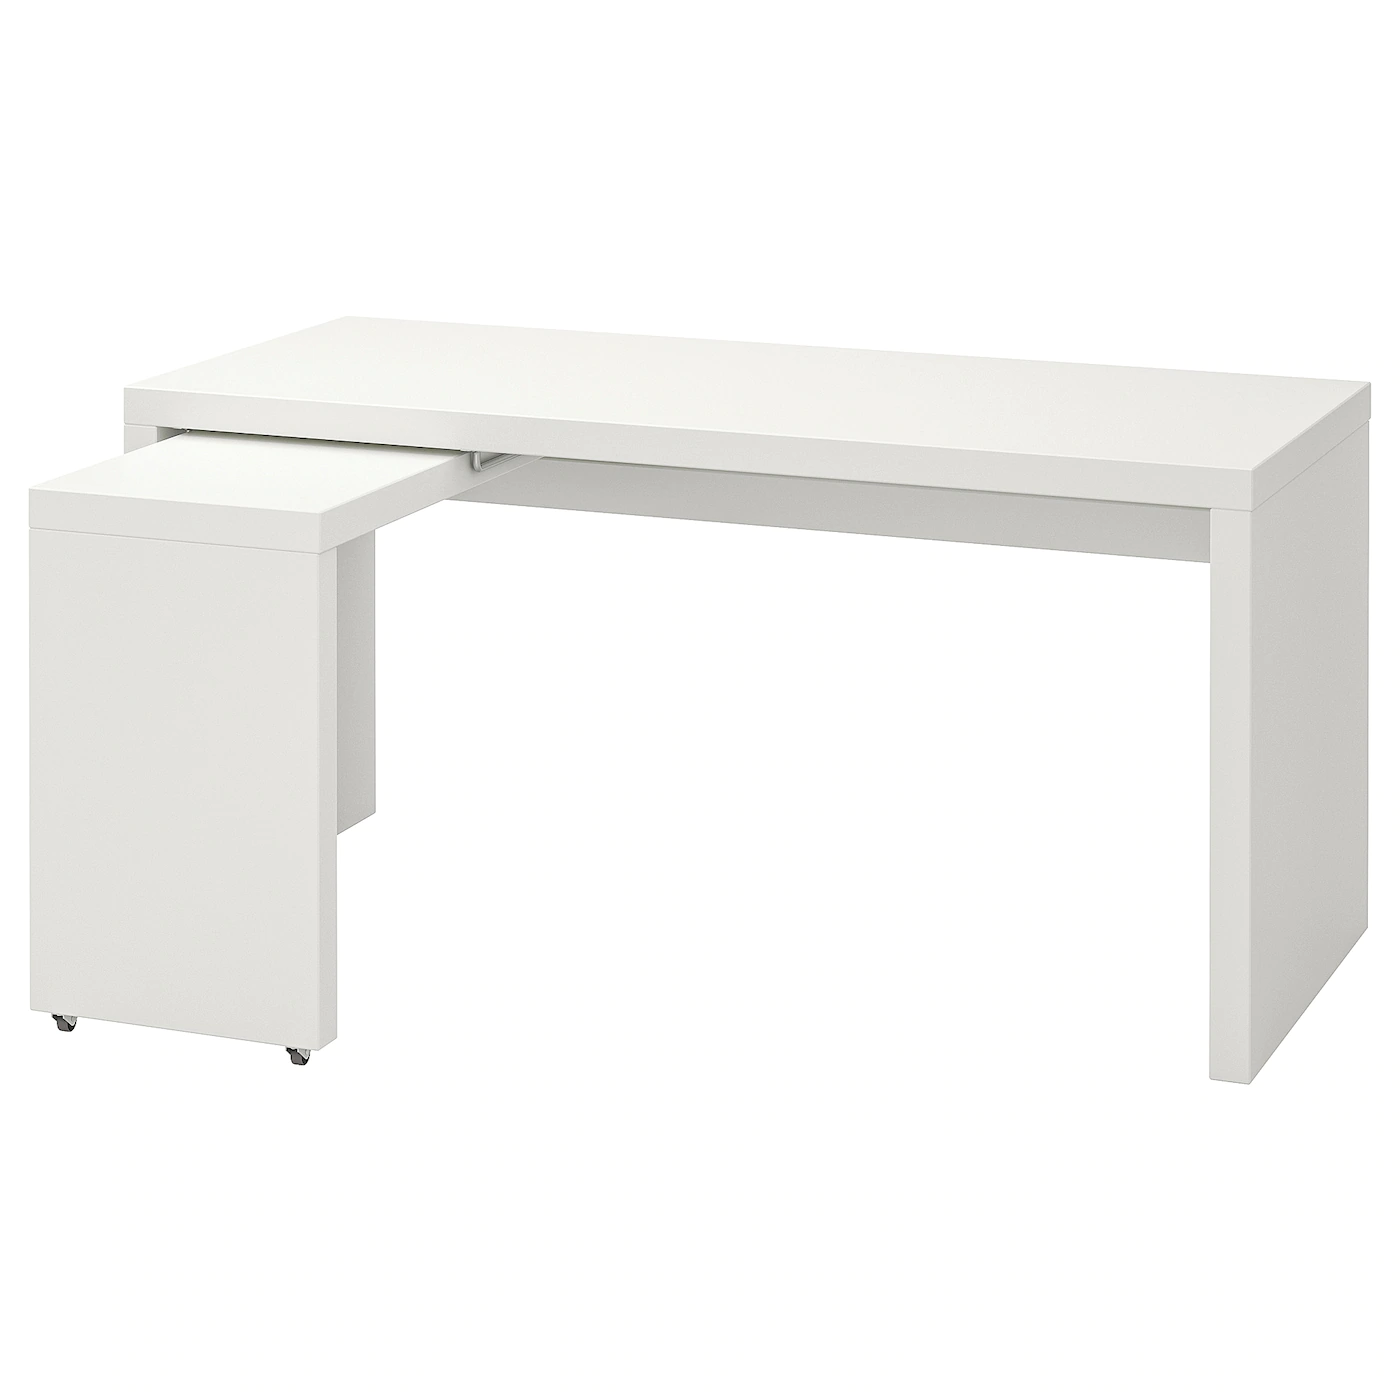 malm-escritorio-con-tablero-extraible-blanco_0735980_pe740314_s5.jpg